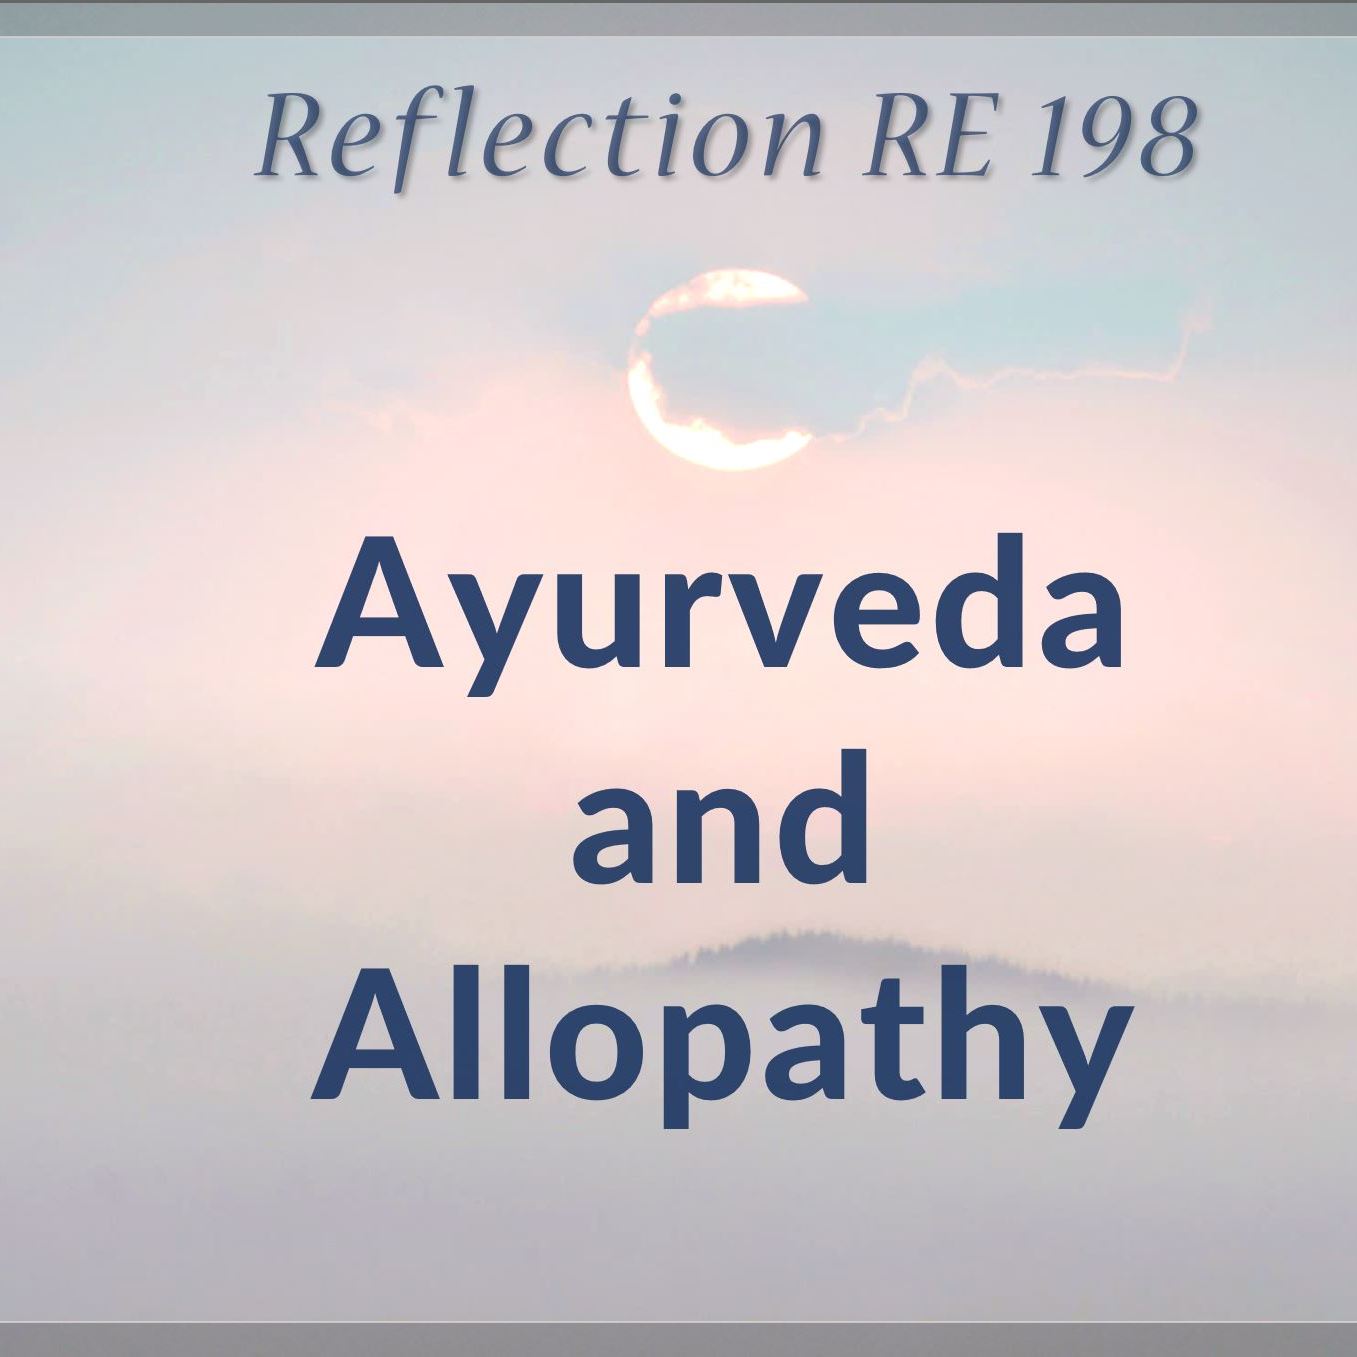 RE 198: Ayurveda and Allopathy